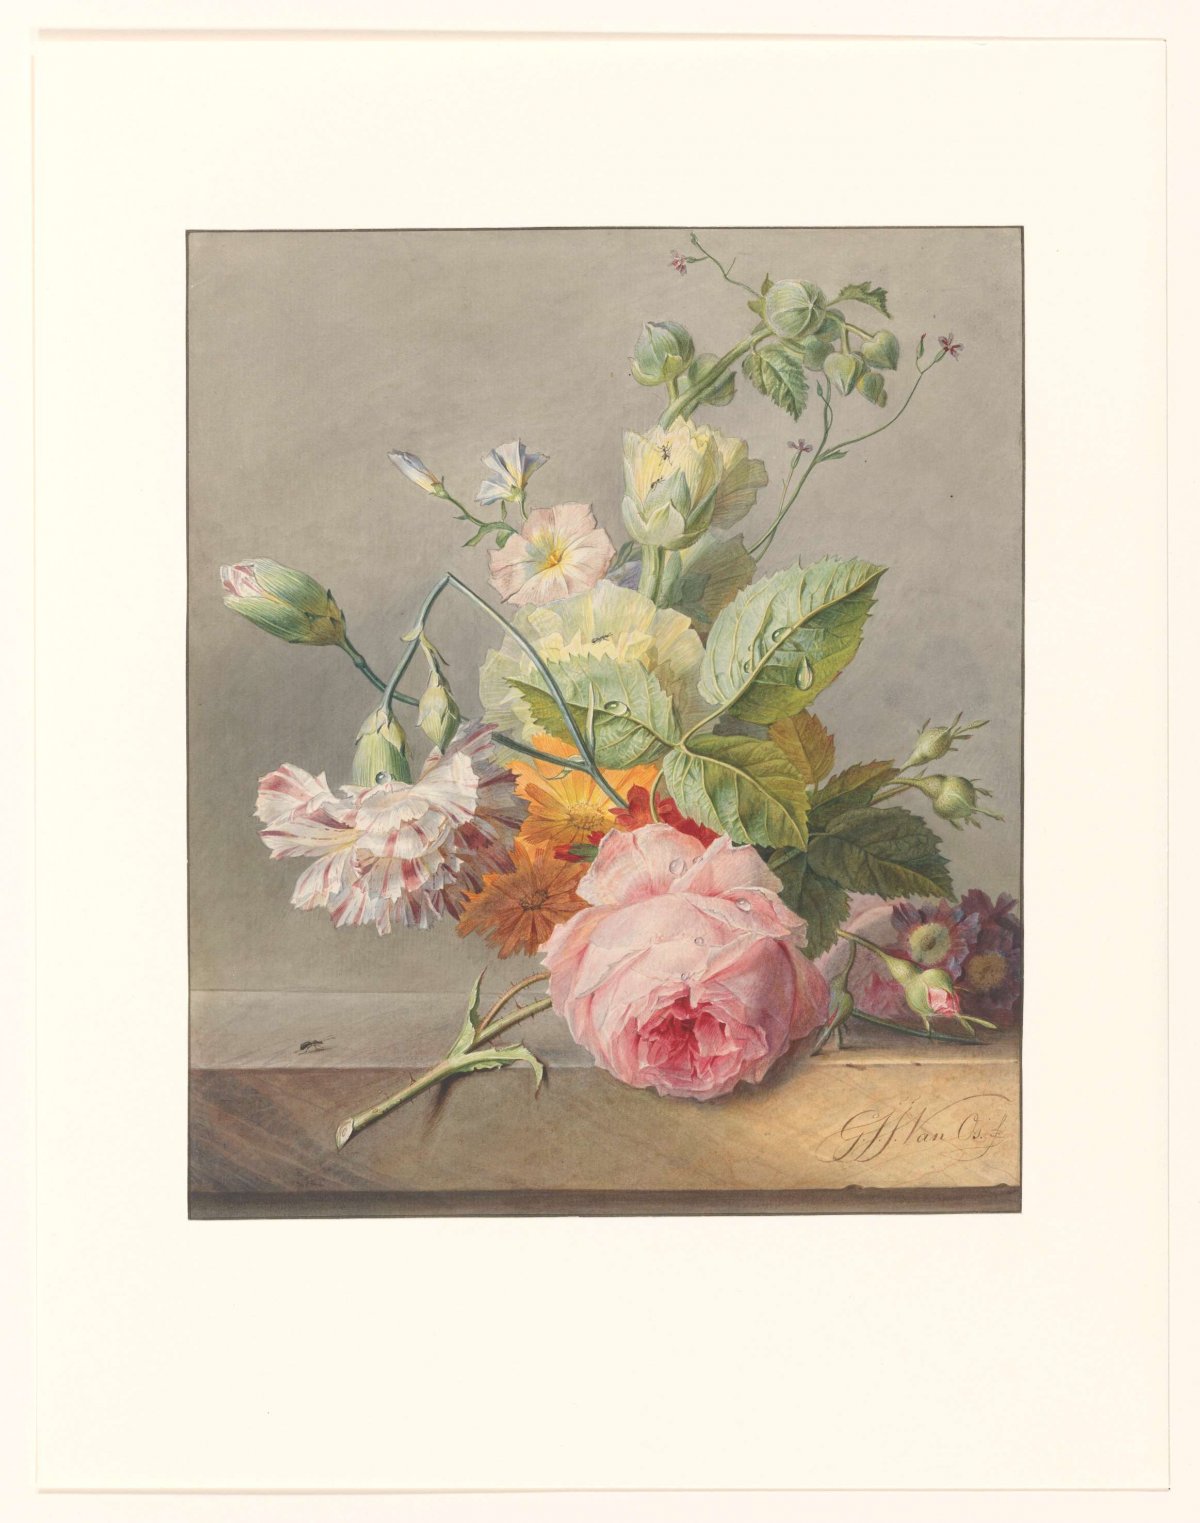 Floral Still Life, Georgius Jacobus Johannes van Os, c. 1800 - c. 1825